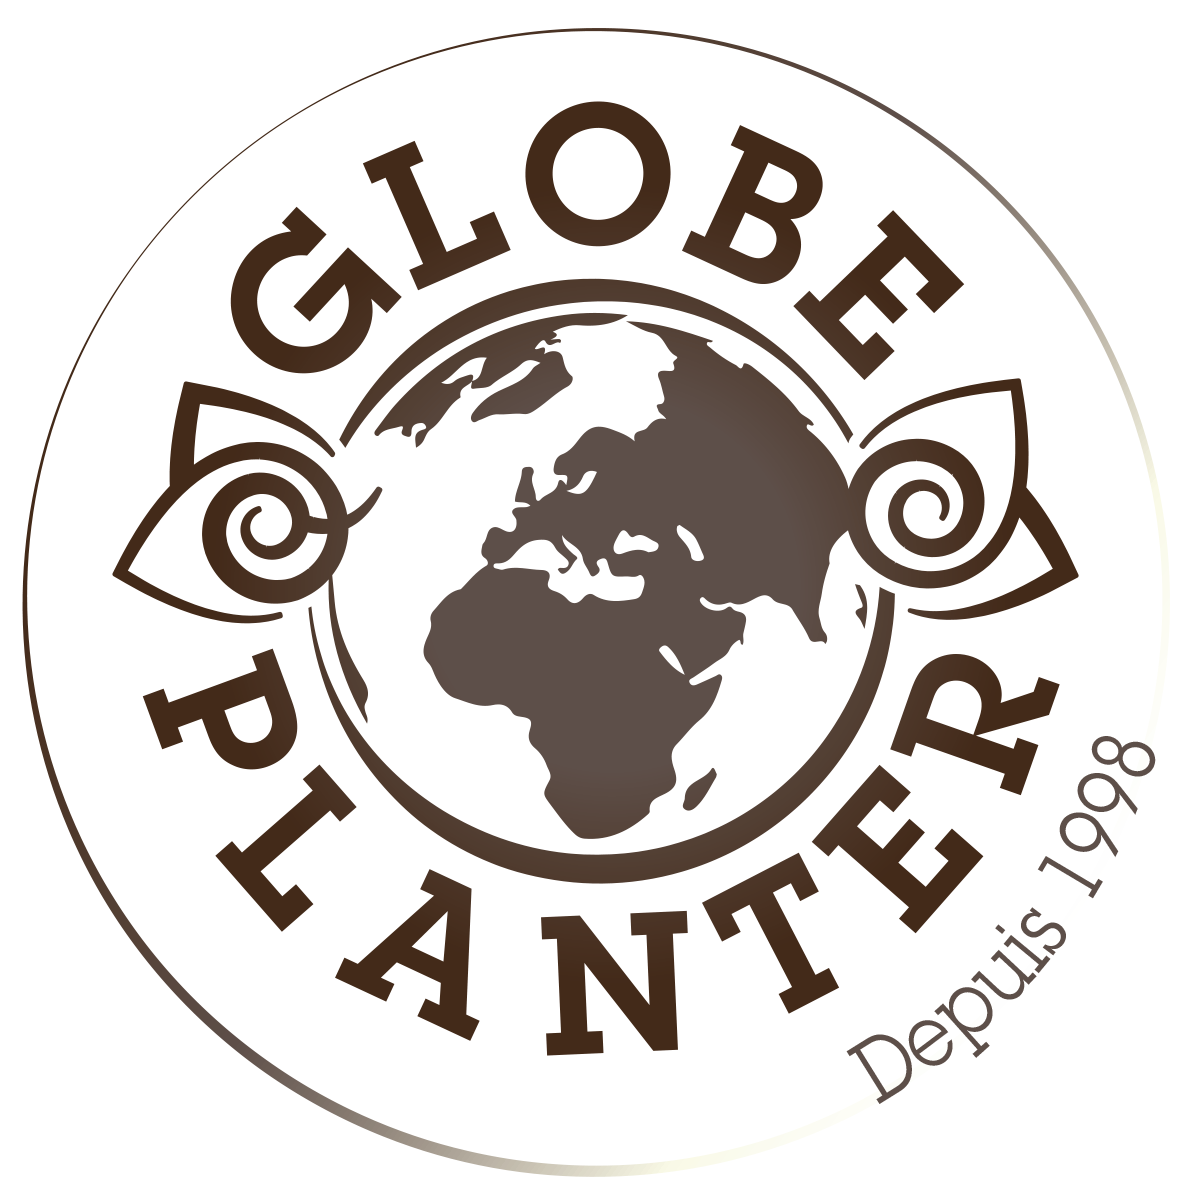 Globe Planter